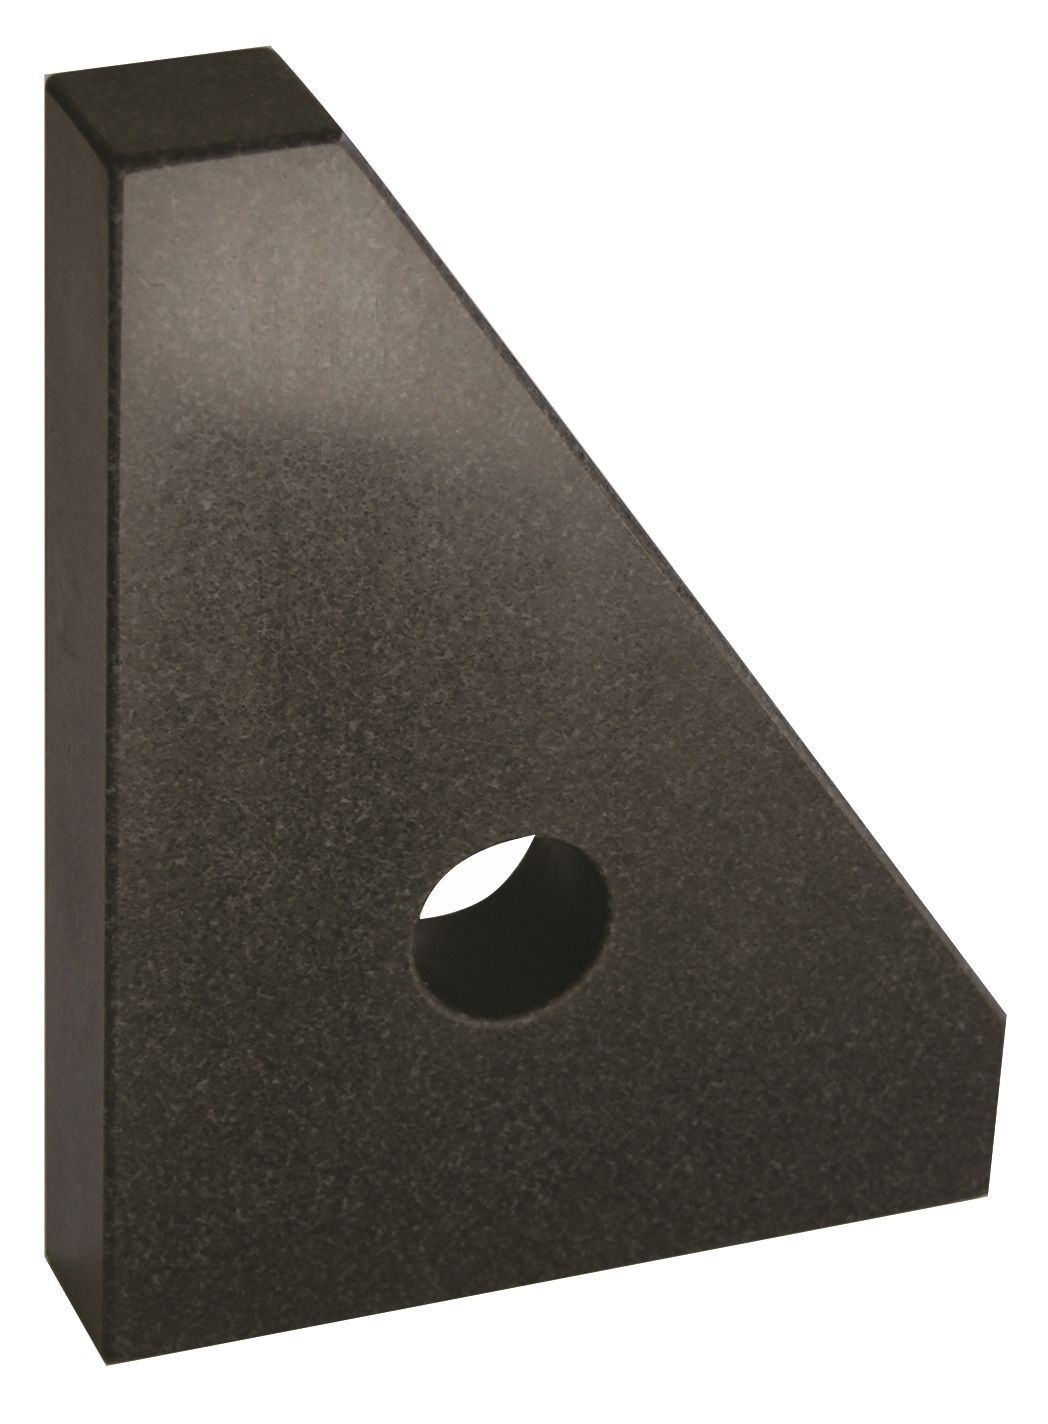 Präzisions-Winkel aus Granit 400 x 250 x 40 mm | DIN 875-0